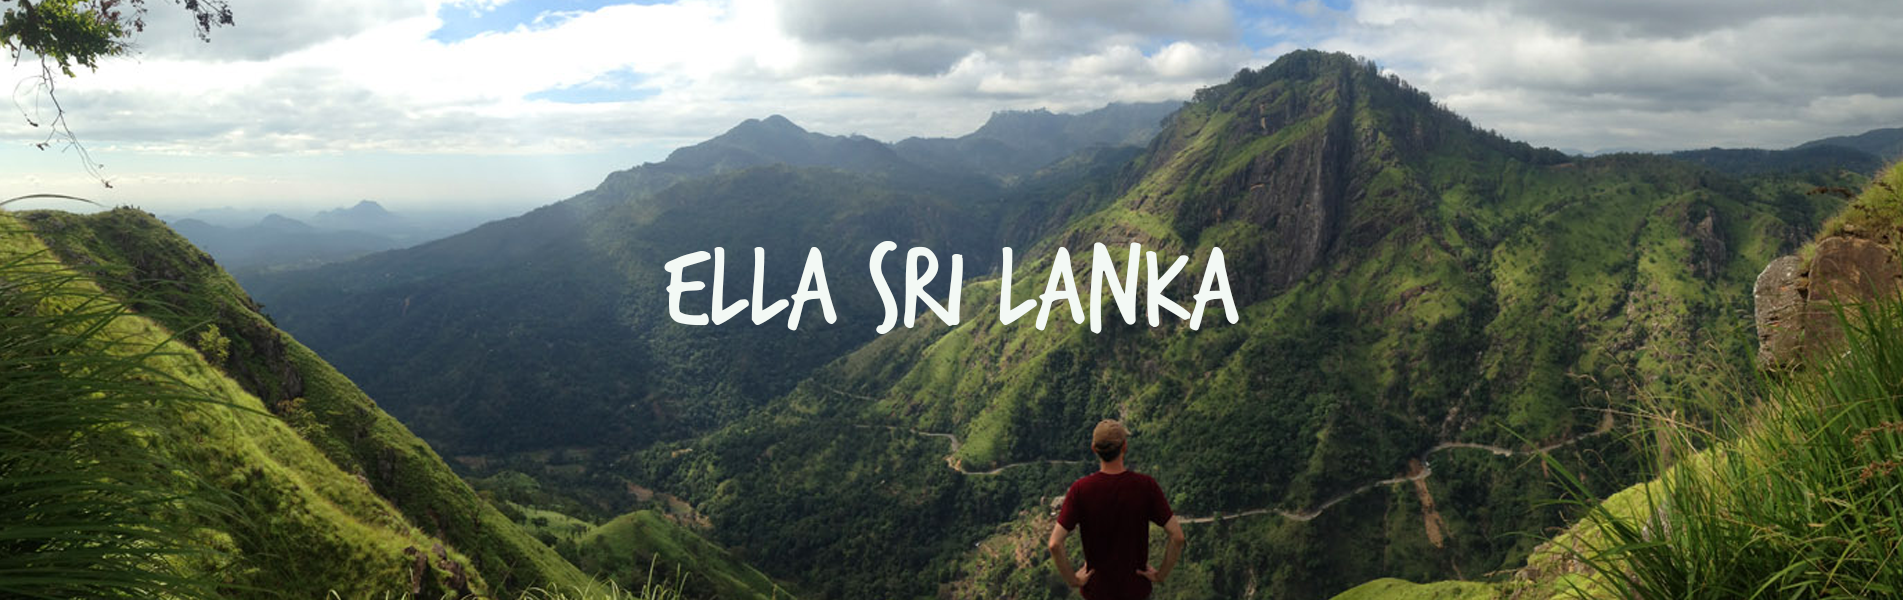 Ella Sri Lanka.